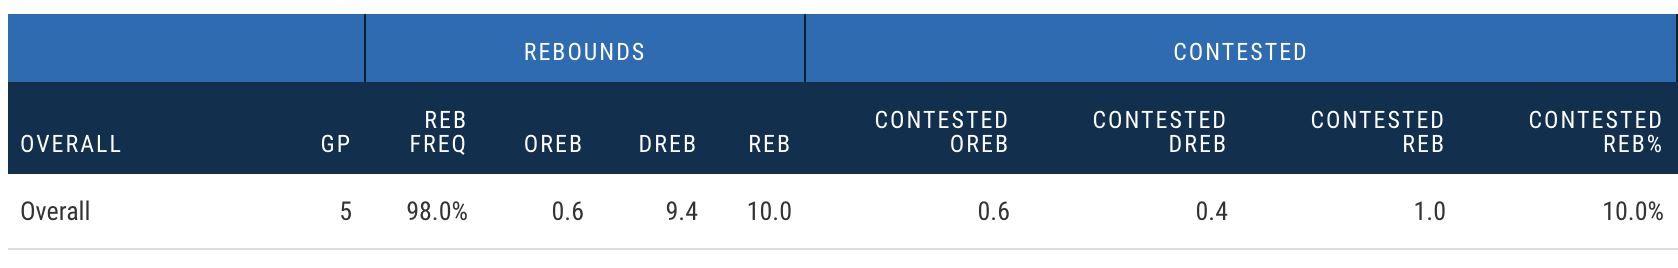 nba对抗下篮板率 詹姆斯对抗篮板率排在联盟倒数第二(1)